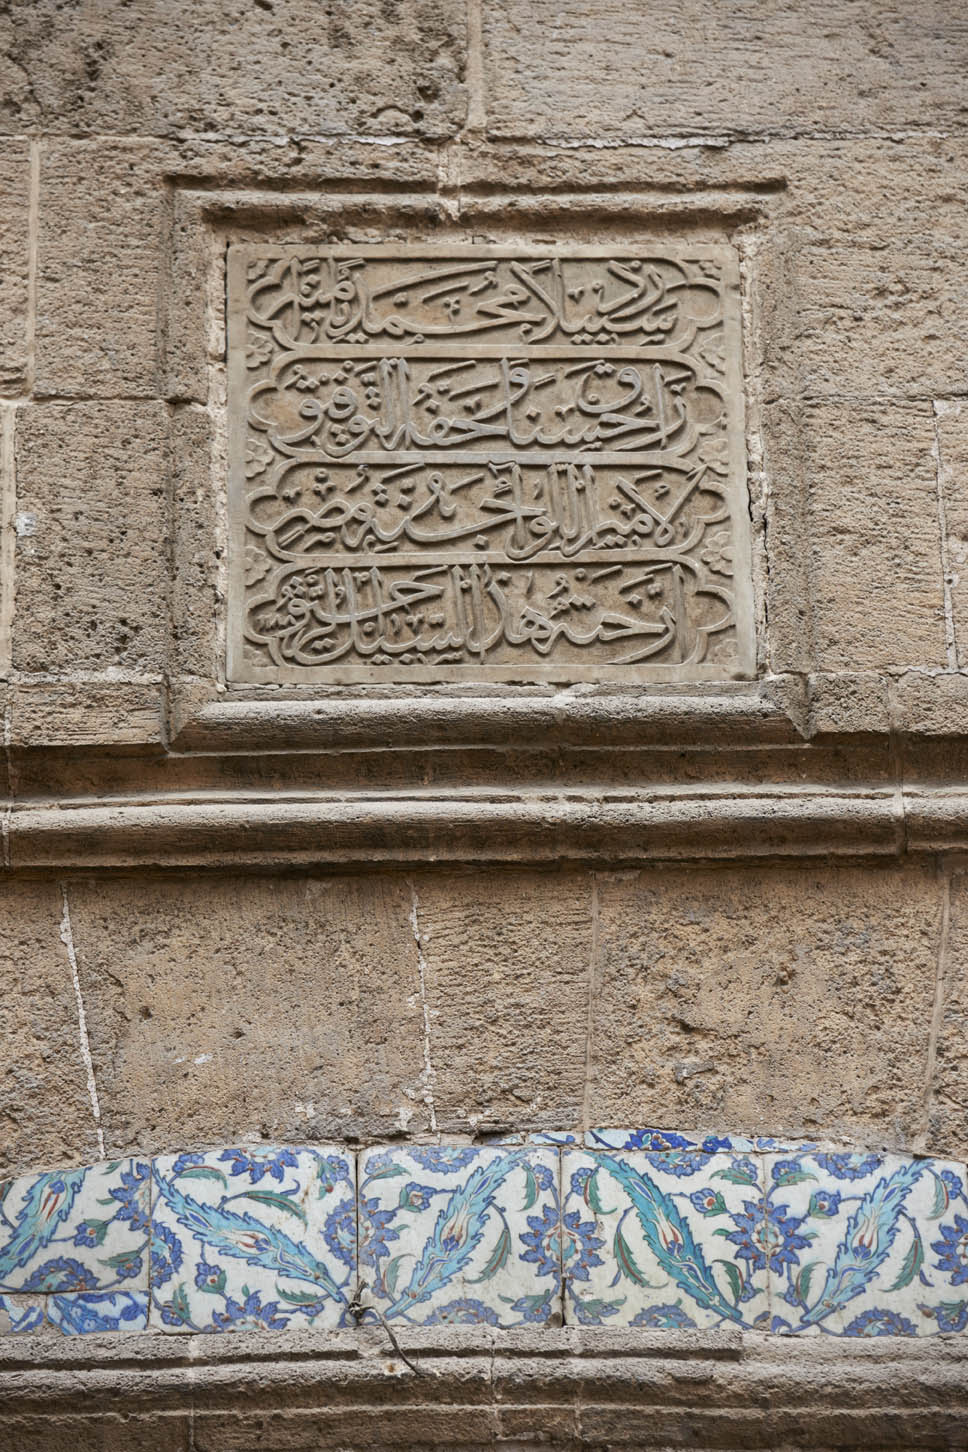 Exterior, detail of inscription panel above sabil grilles